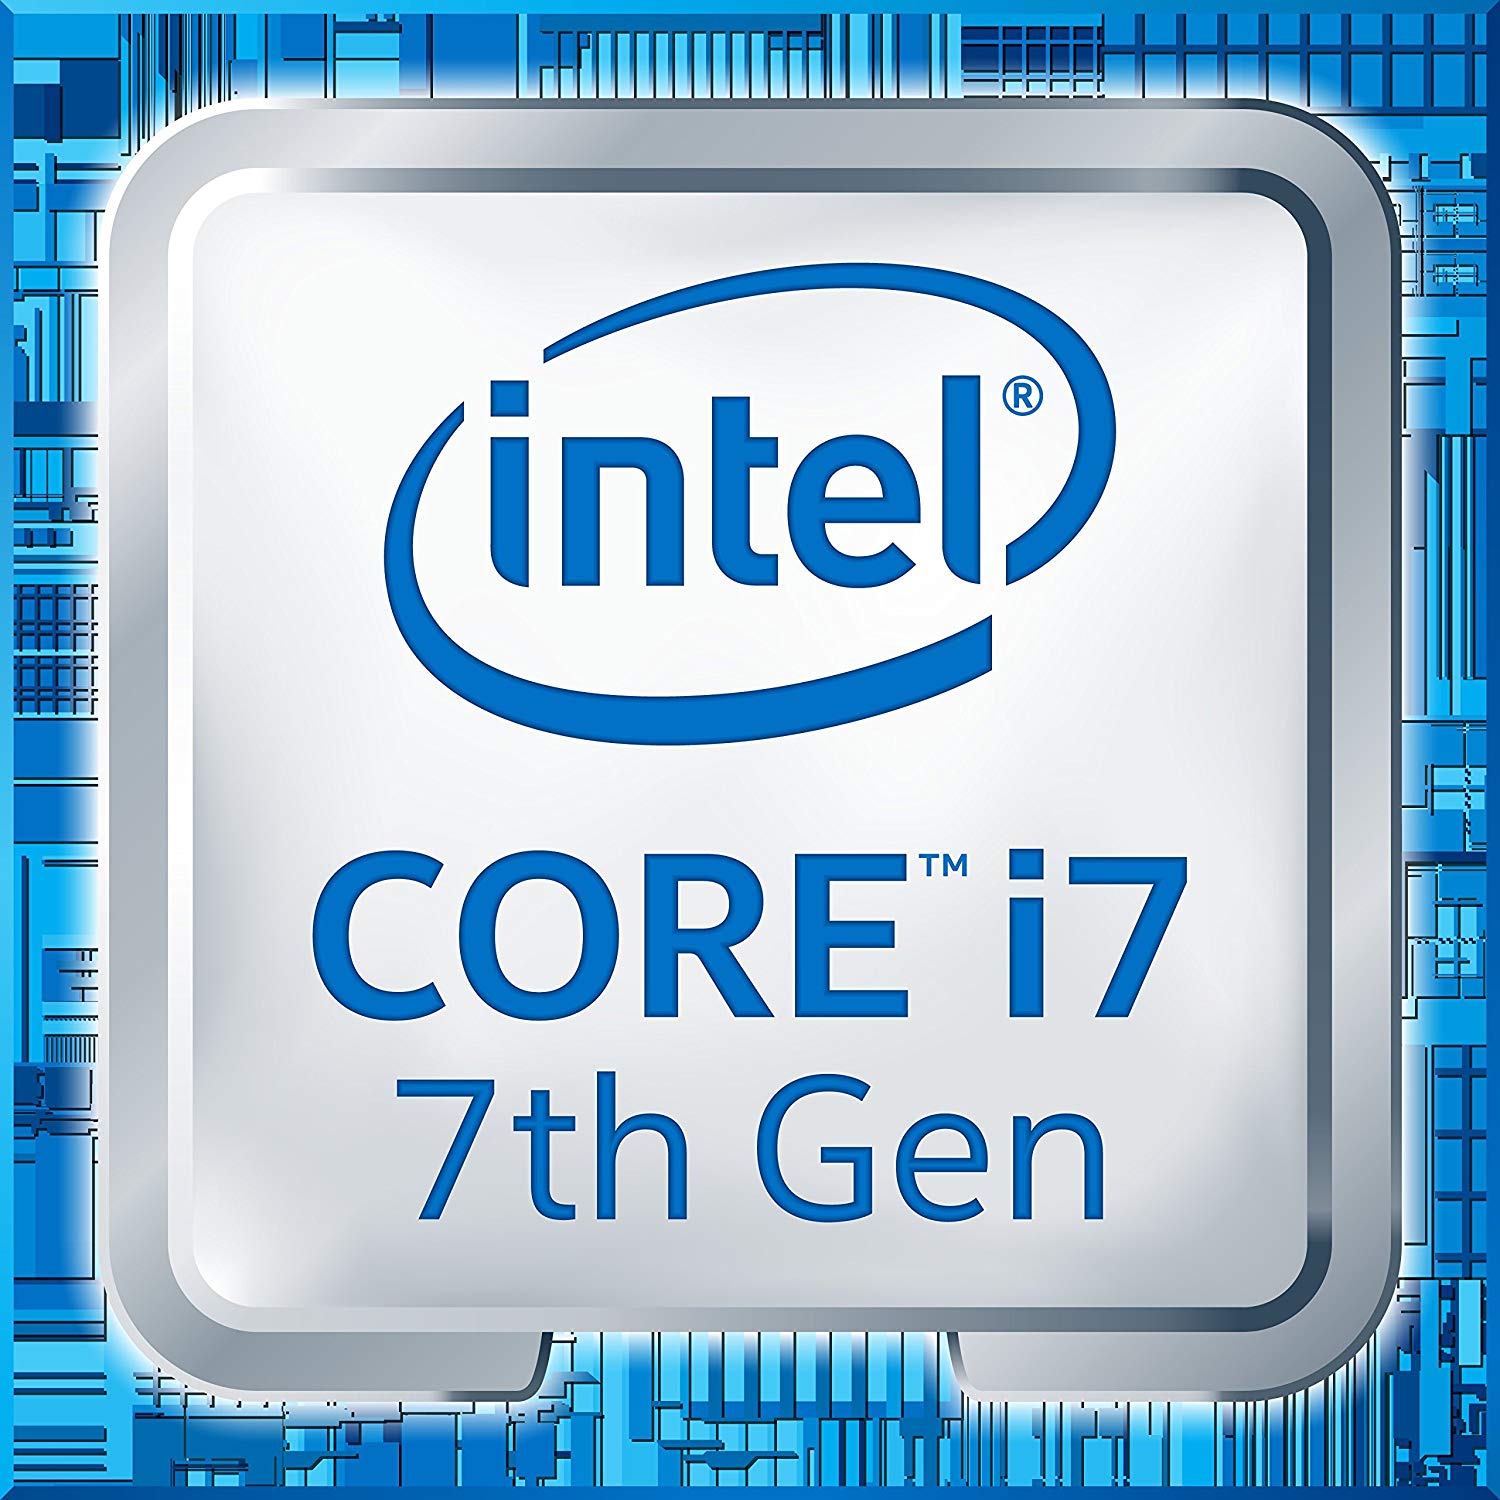 Intel Core i7-5500U overclock